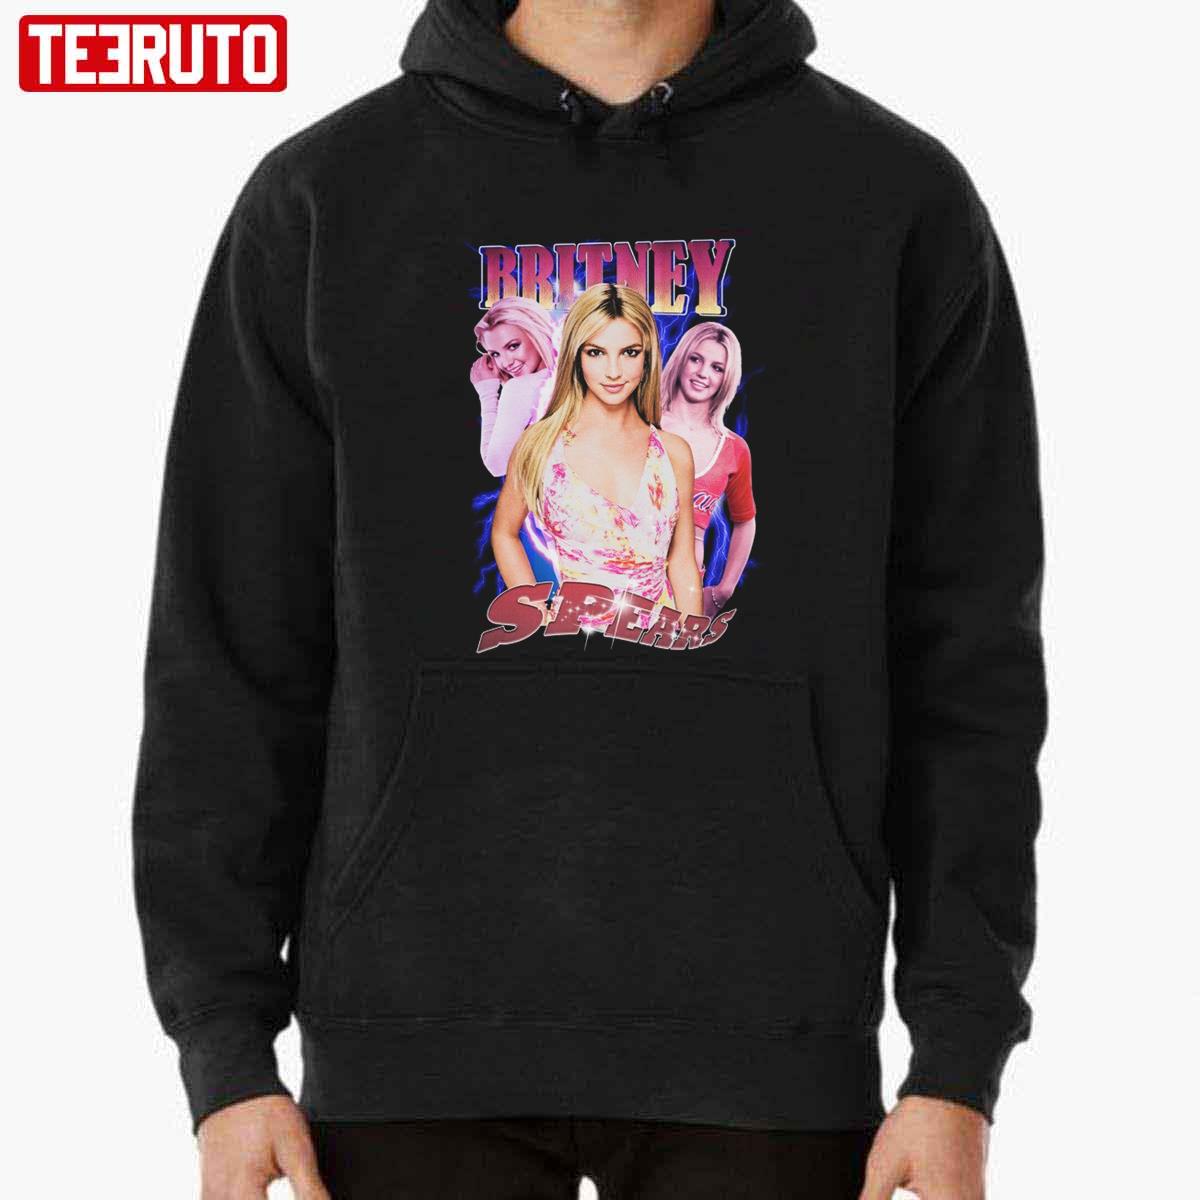 Britney Spears Vintage Pop Star Retro Bootleg Unisex T-Shirt Hoodie